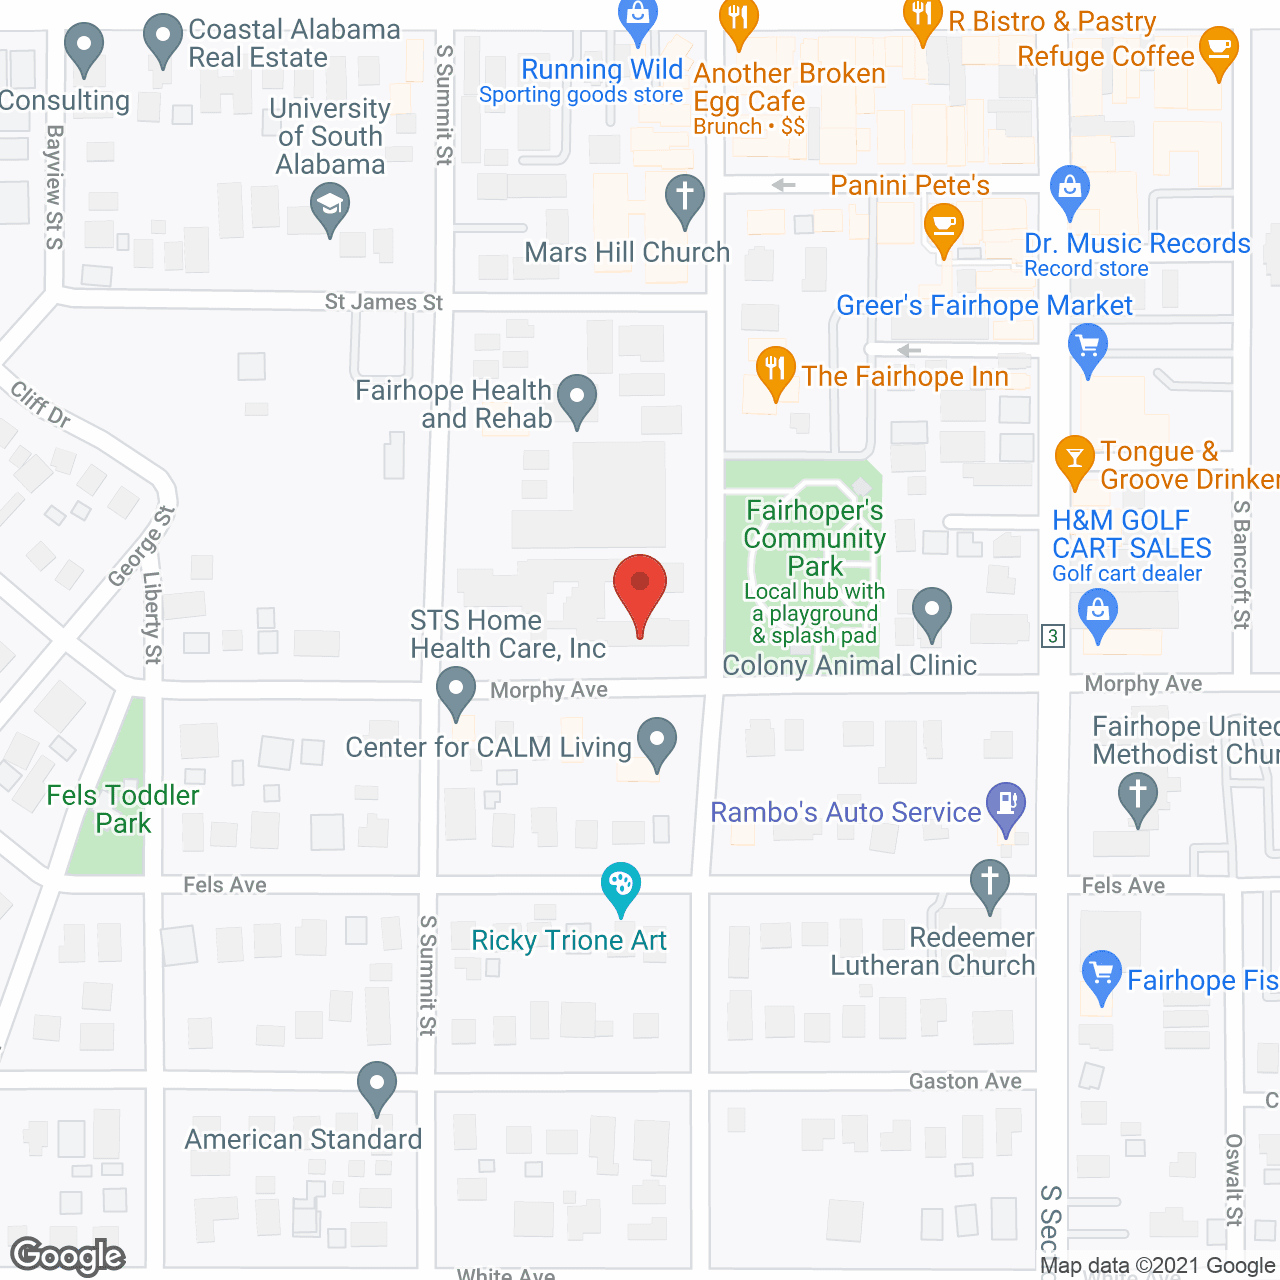 Golden LivingCenter - Fairhope in google map